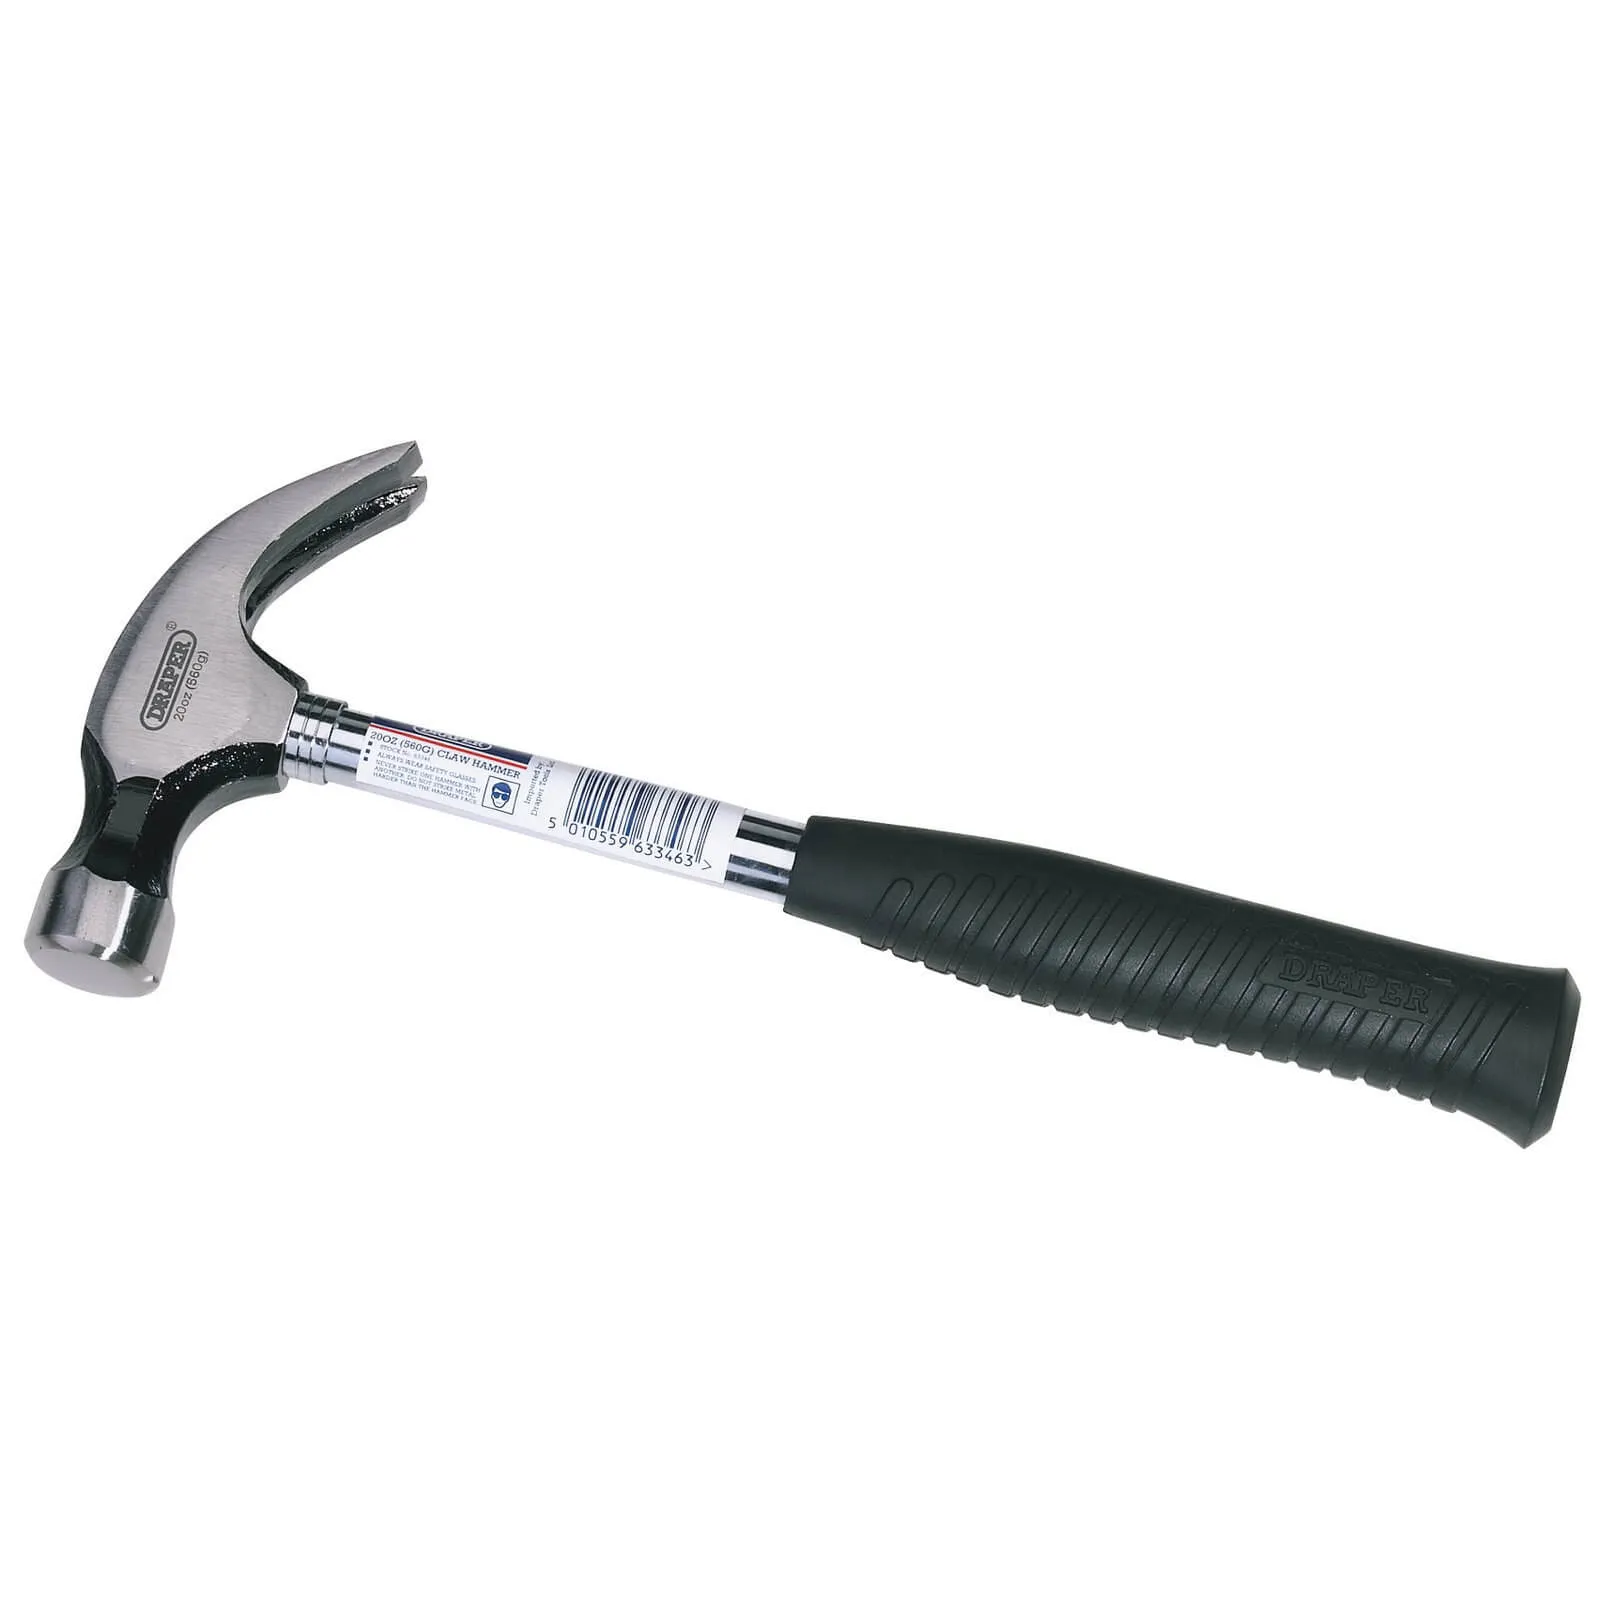 Draper Claw Hammer - 560g